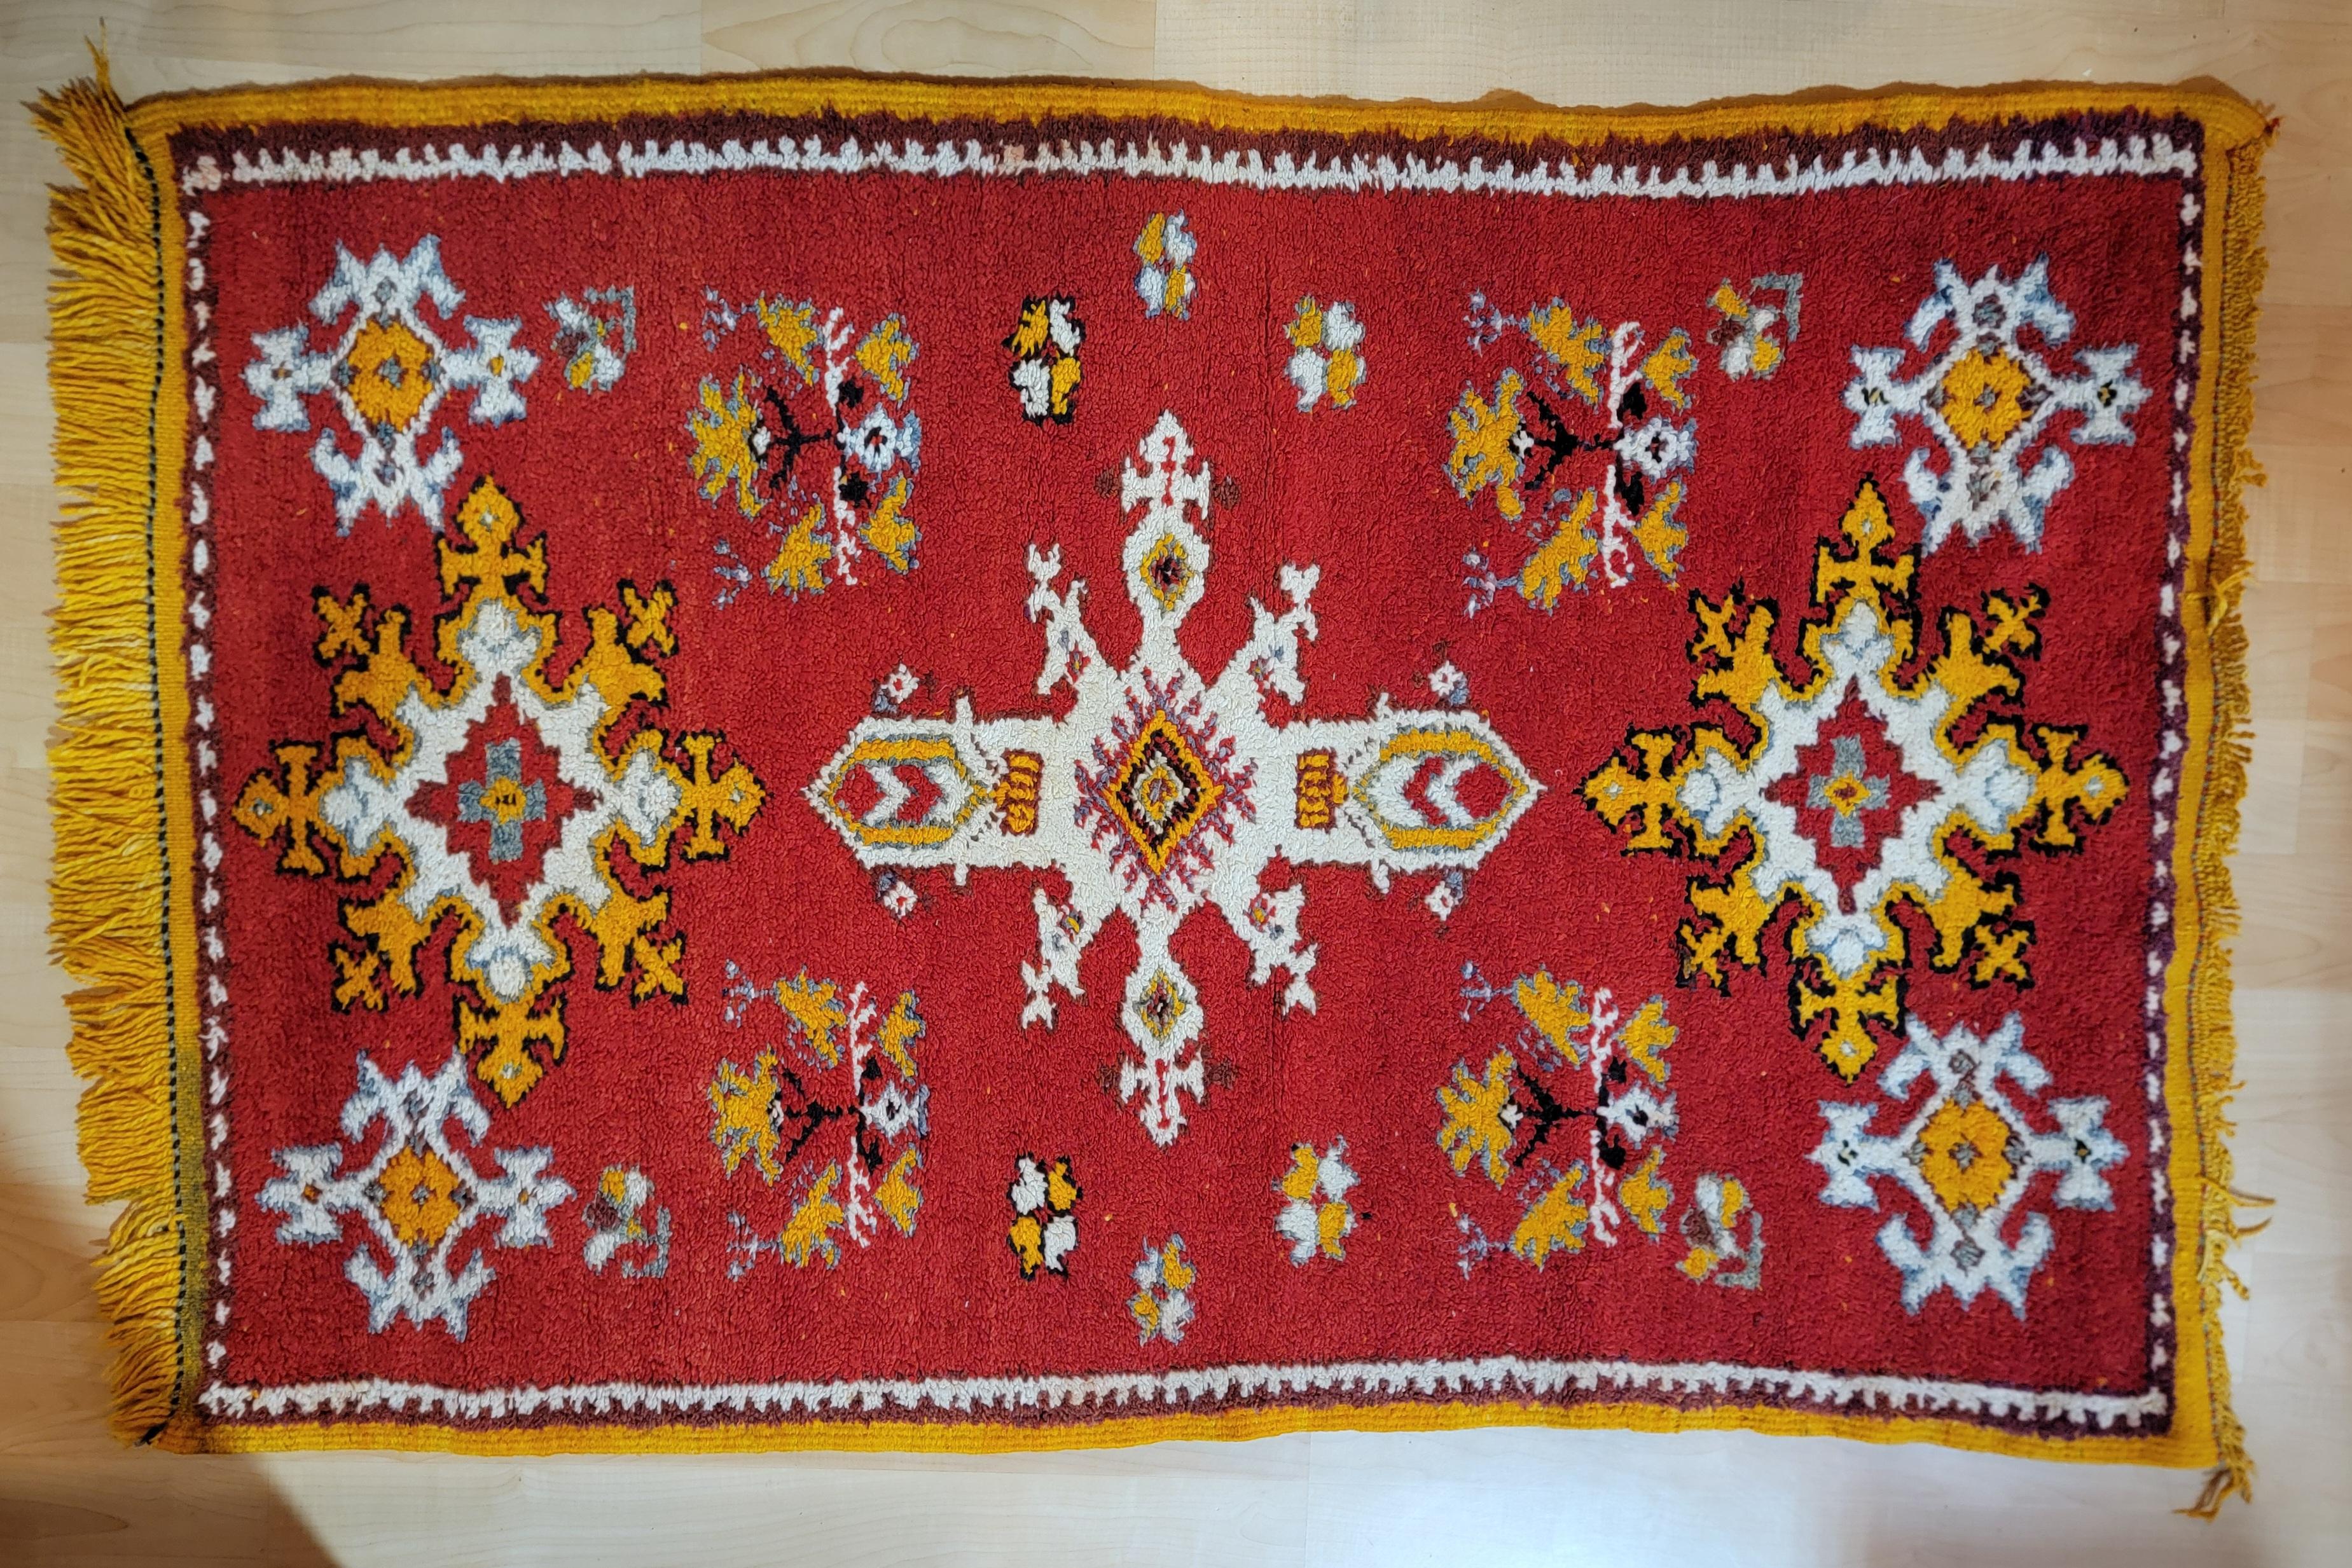 1960's Moroccan rug retaining original label. Measuring 38.5